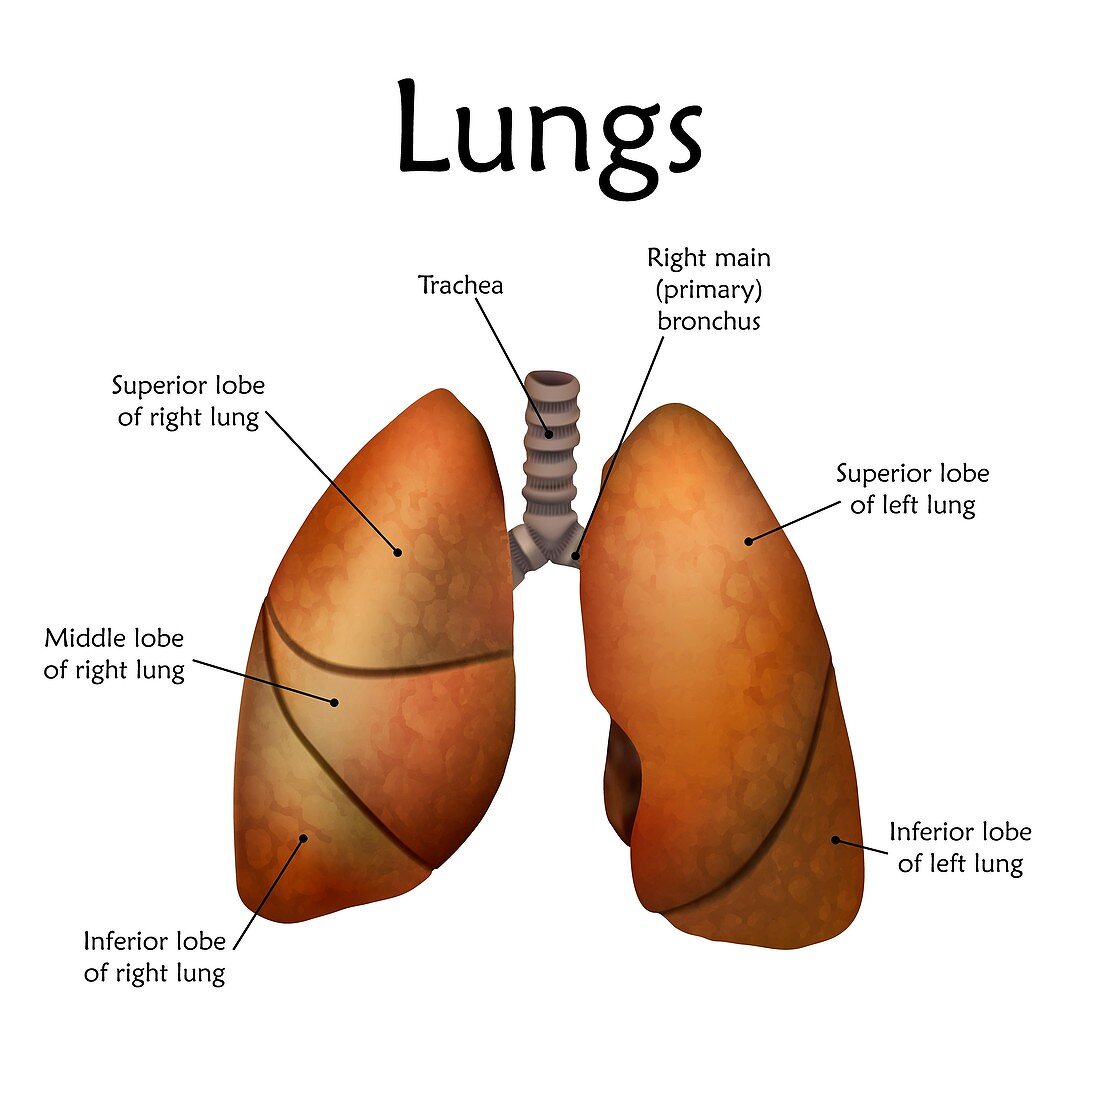 Human lungs, illustration